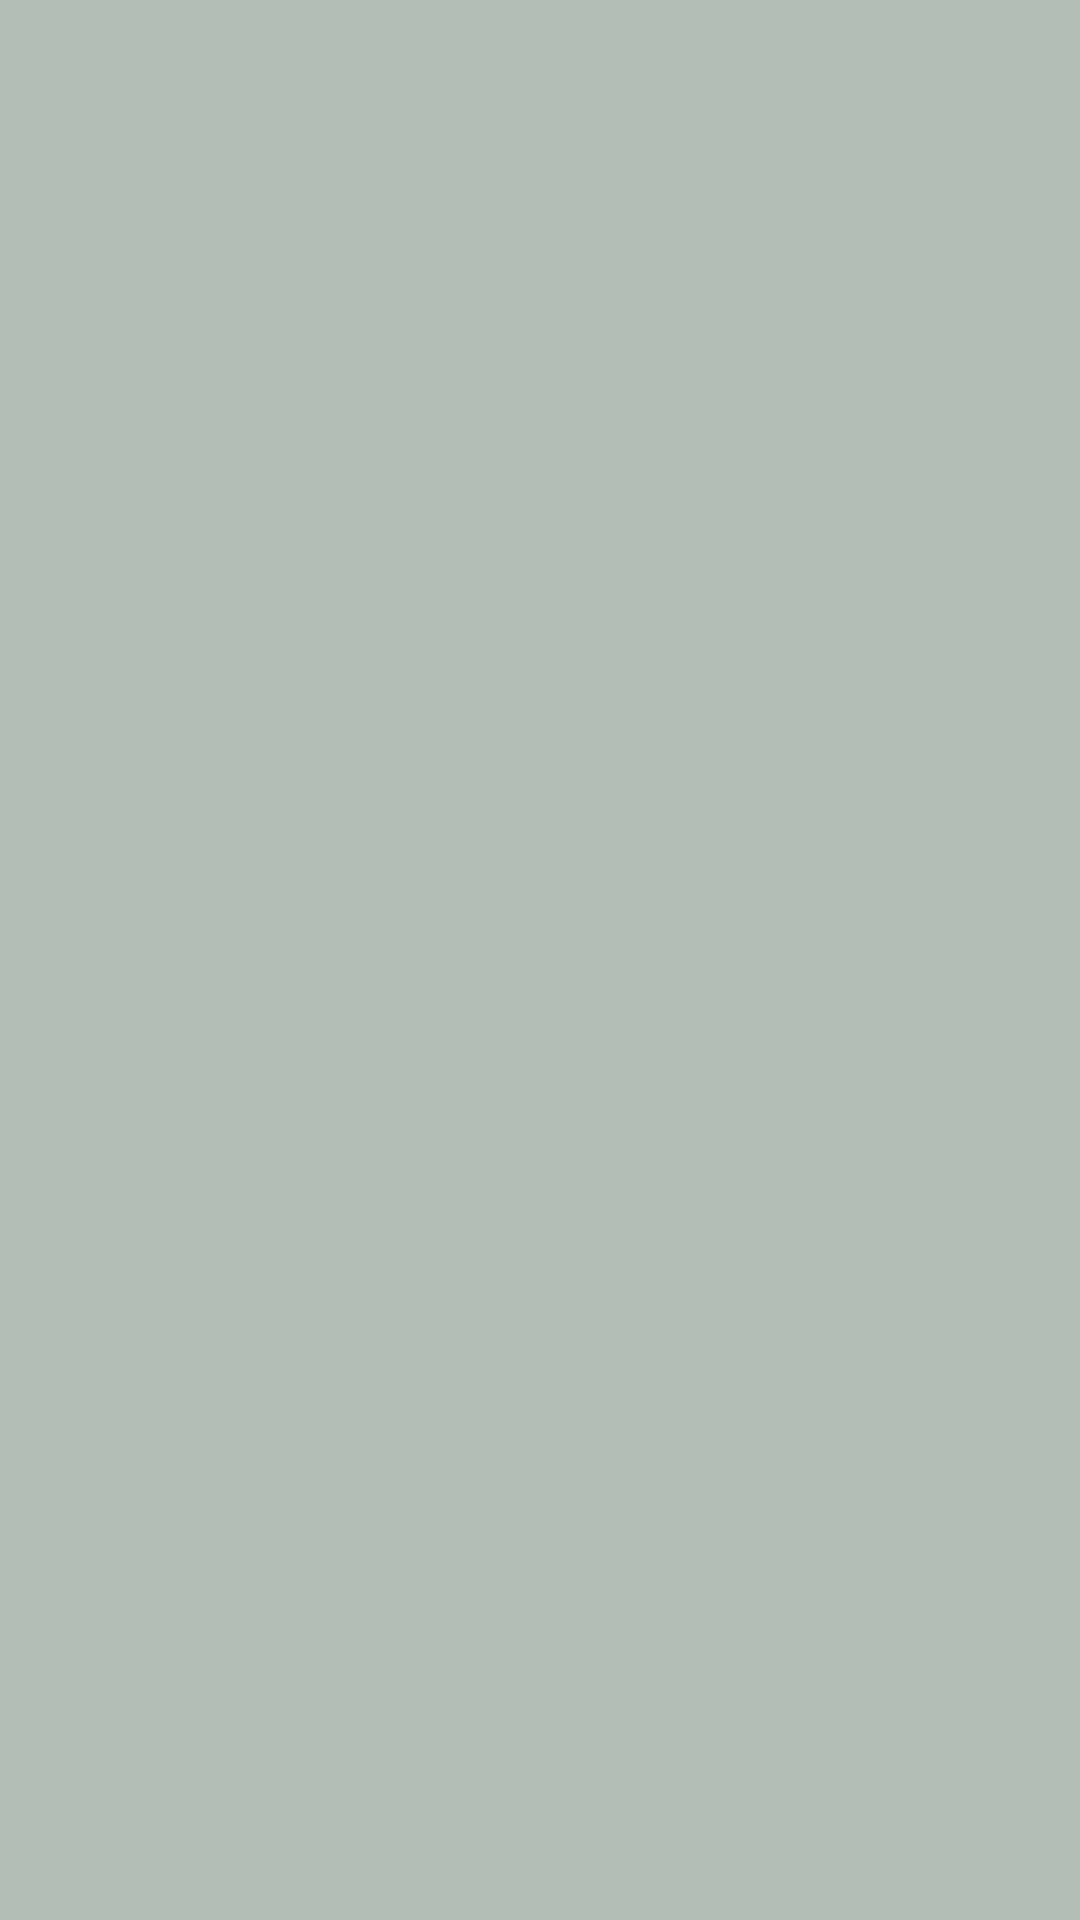 Ash Grey Solid Color Background